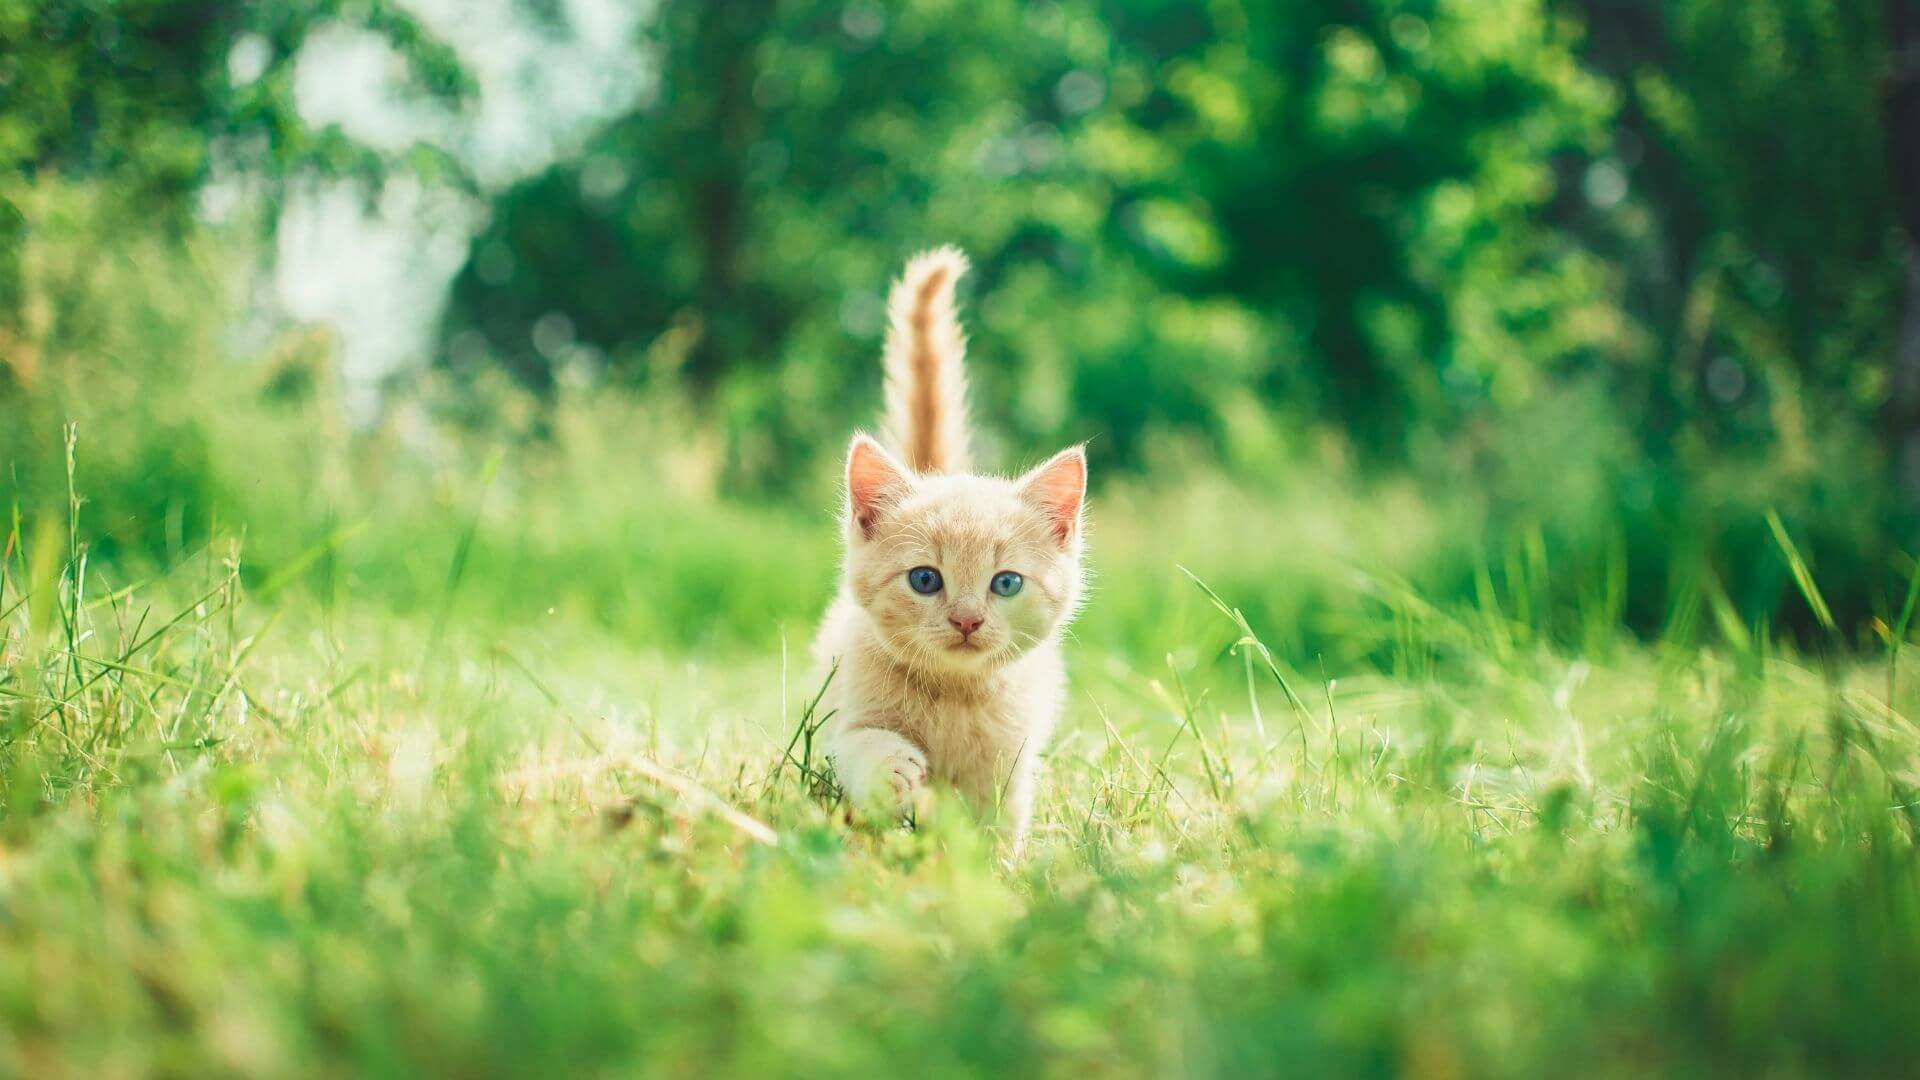 kitten walking on grass